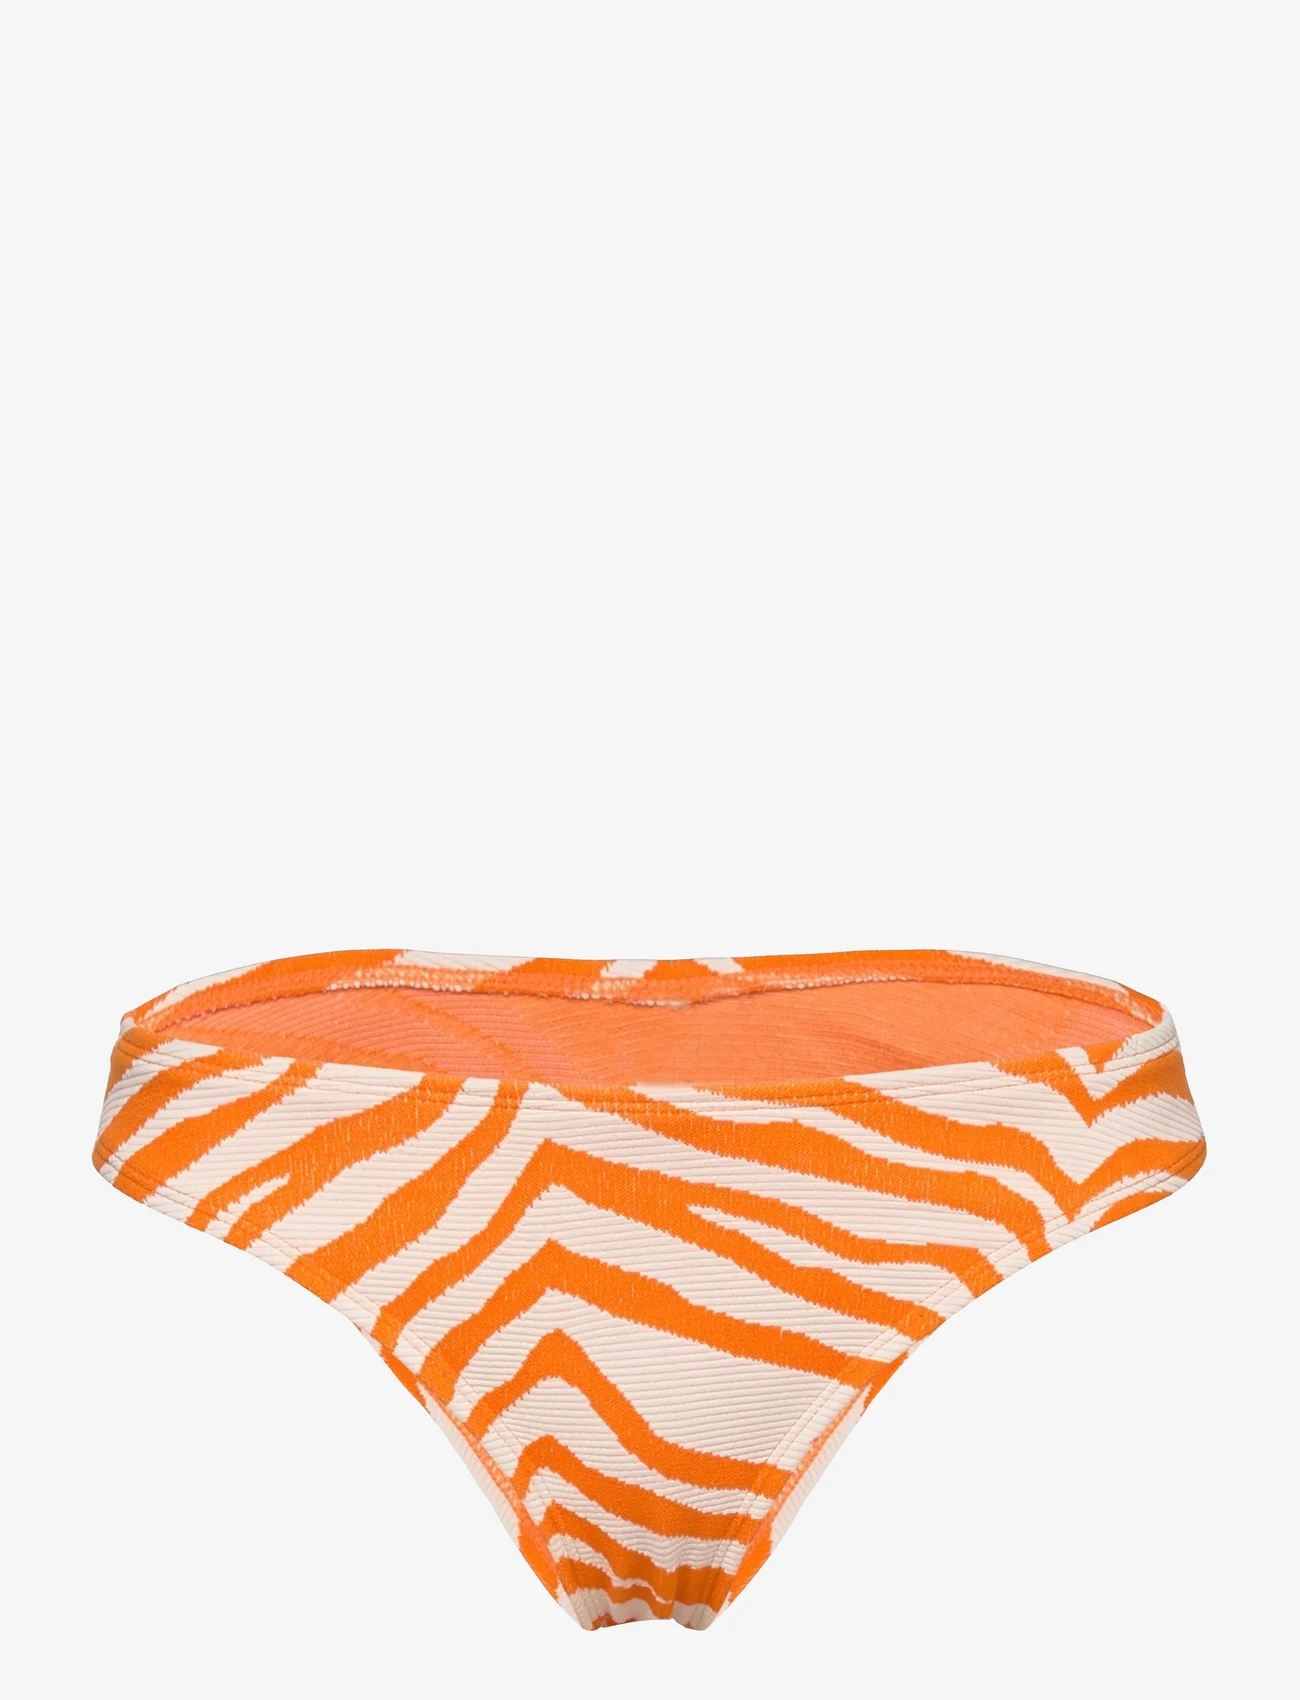 Becksöndergaard - Zecora Biddi Bikini Cheeky - bikini briefs - persimmon orange - 0